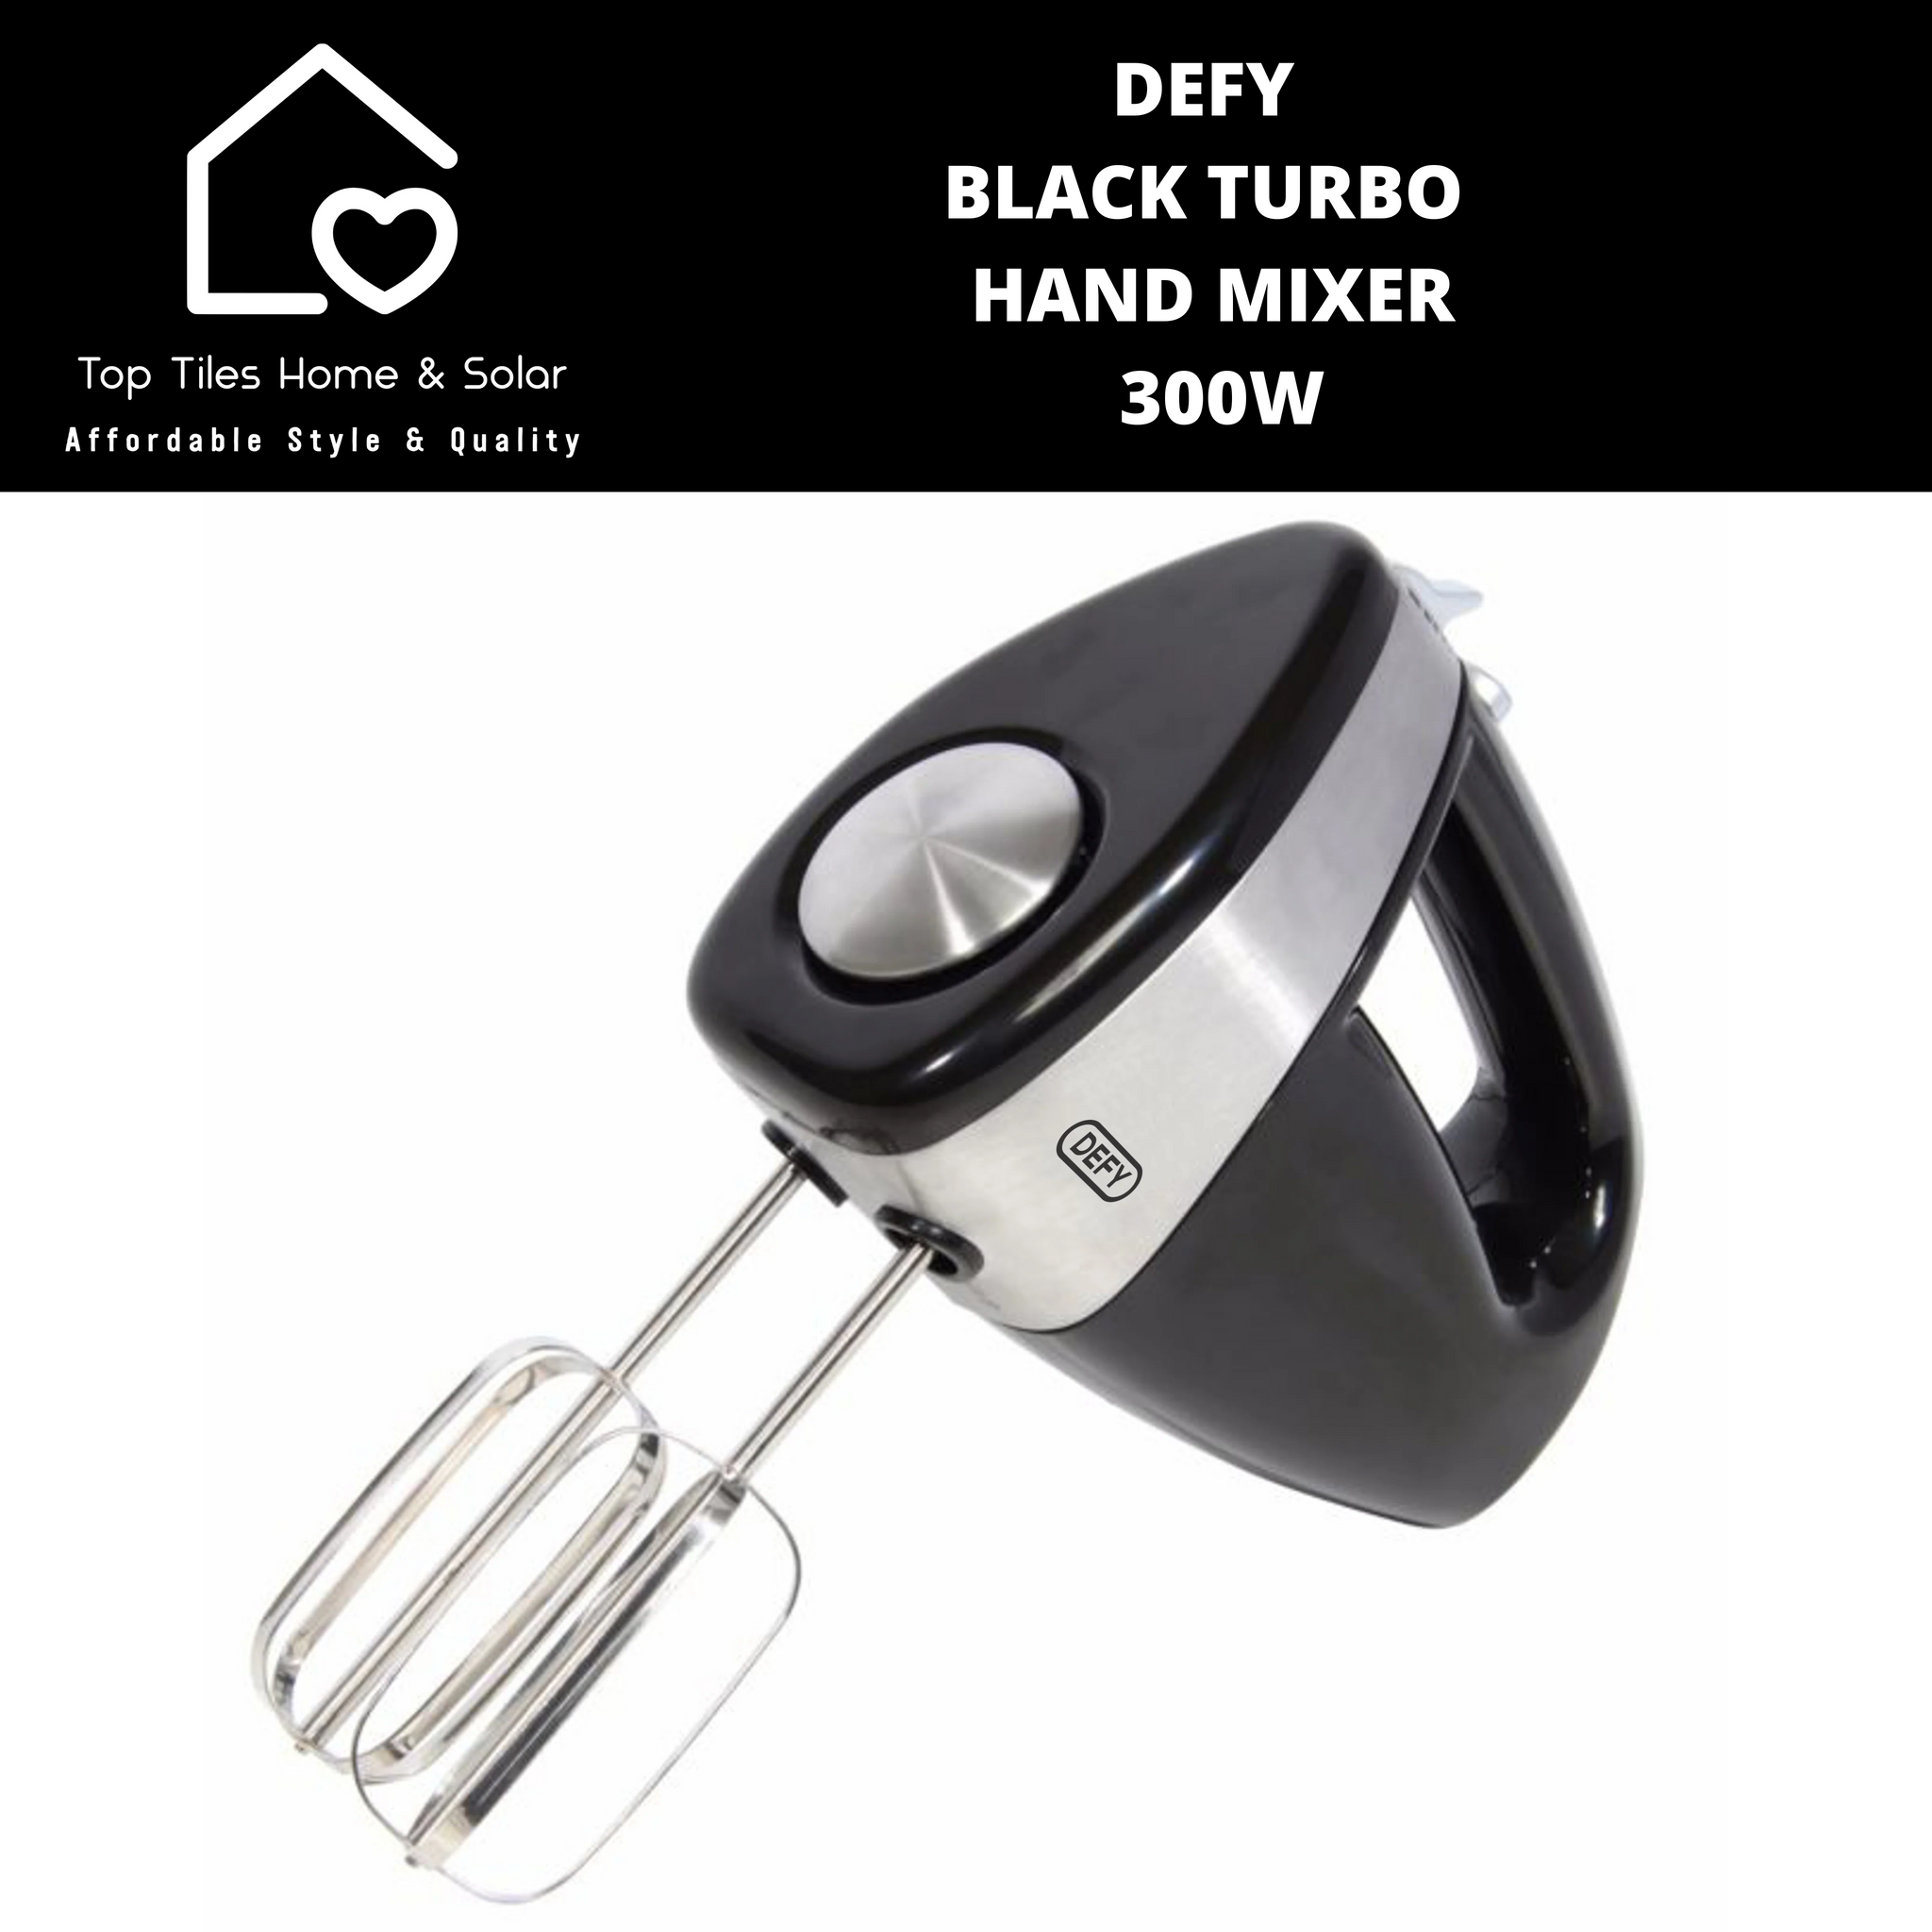 Black HM5040B 300W Hand Turbo Solar – Defy Mixer & Tiles Home - Top